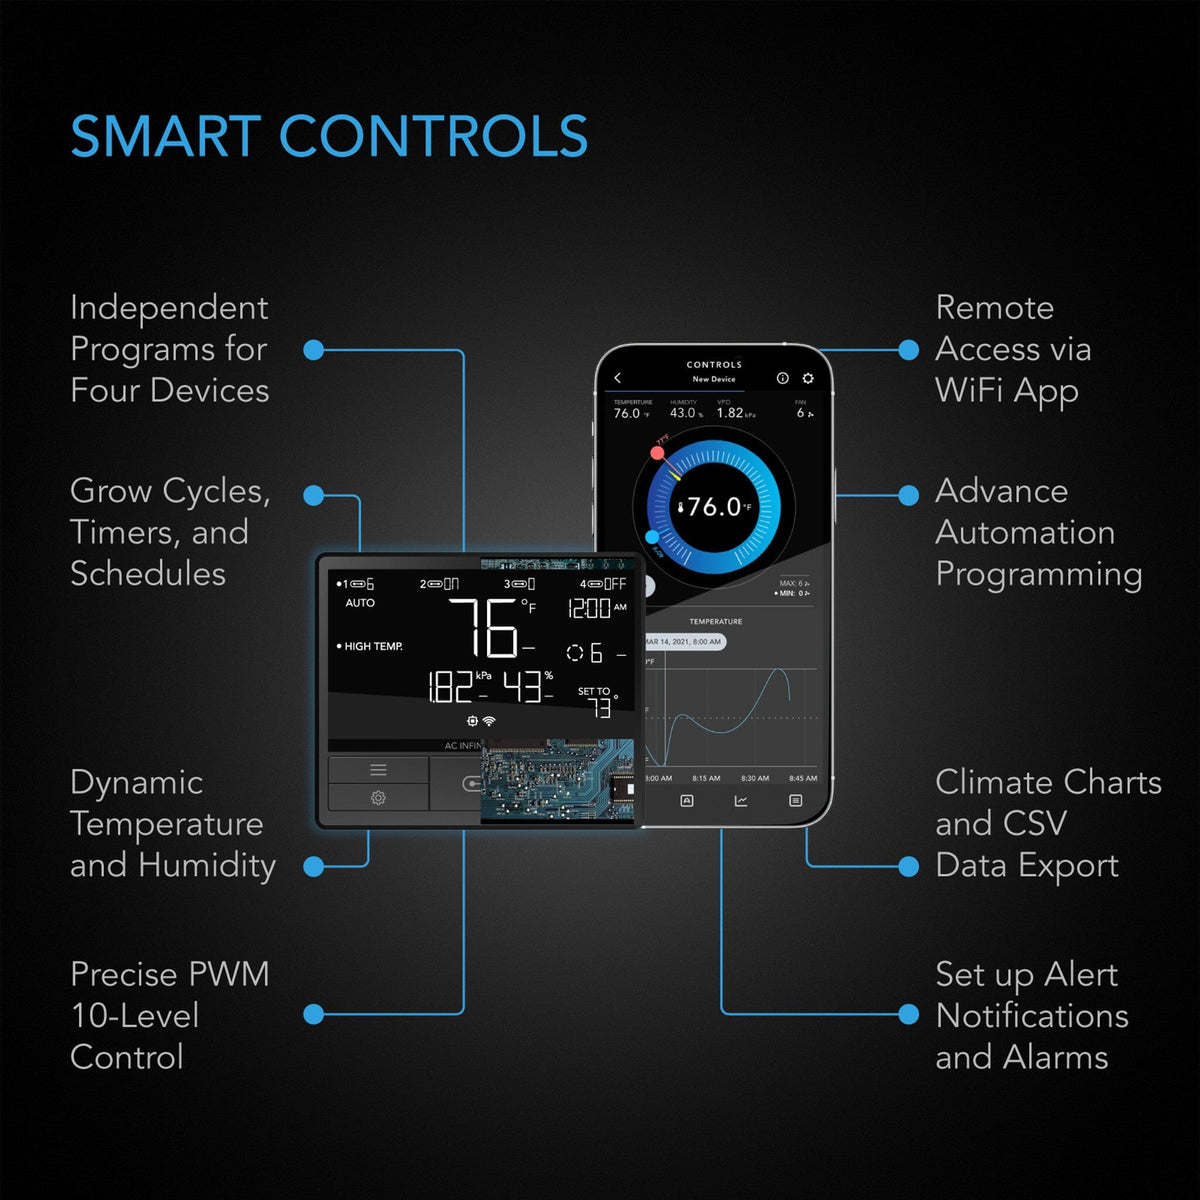 Smart Controls